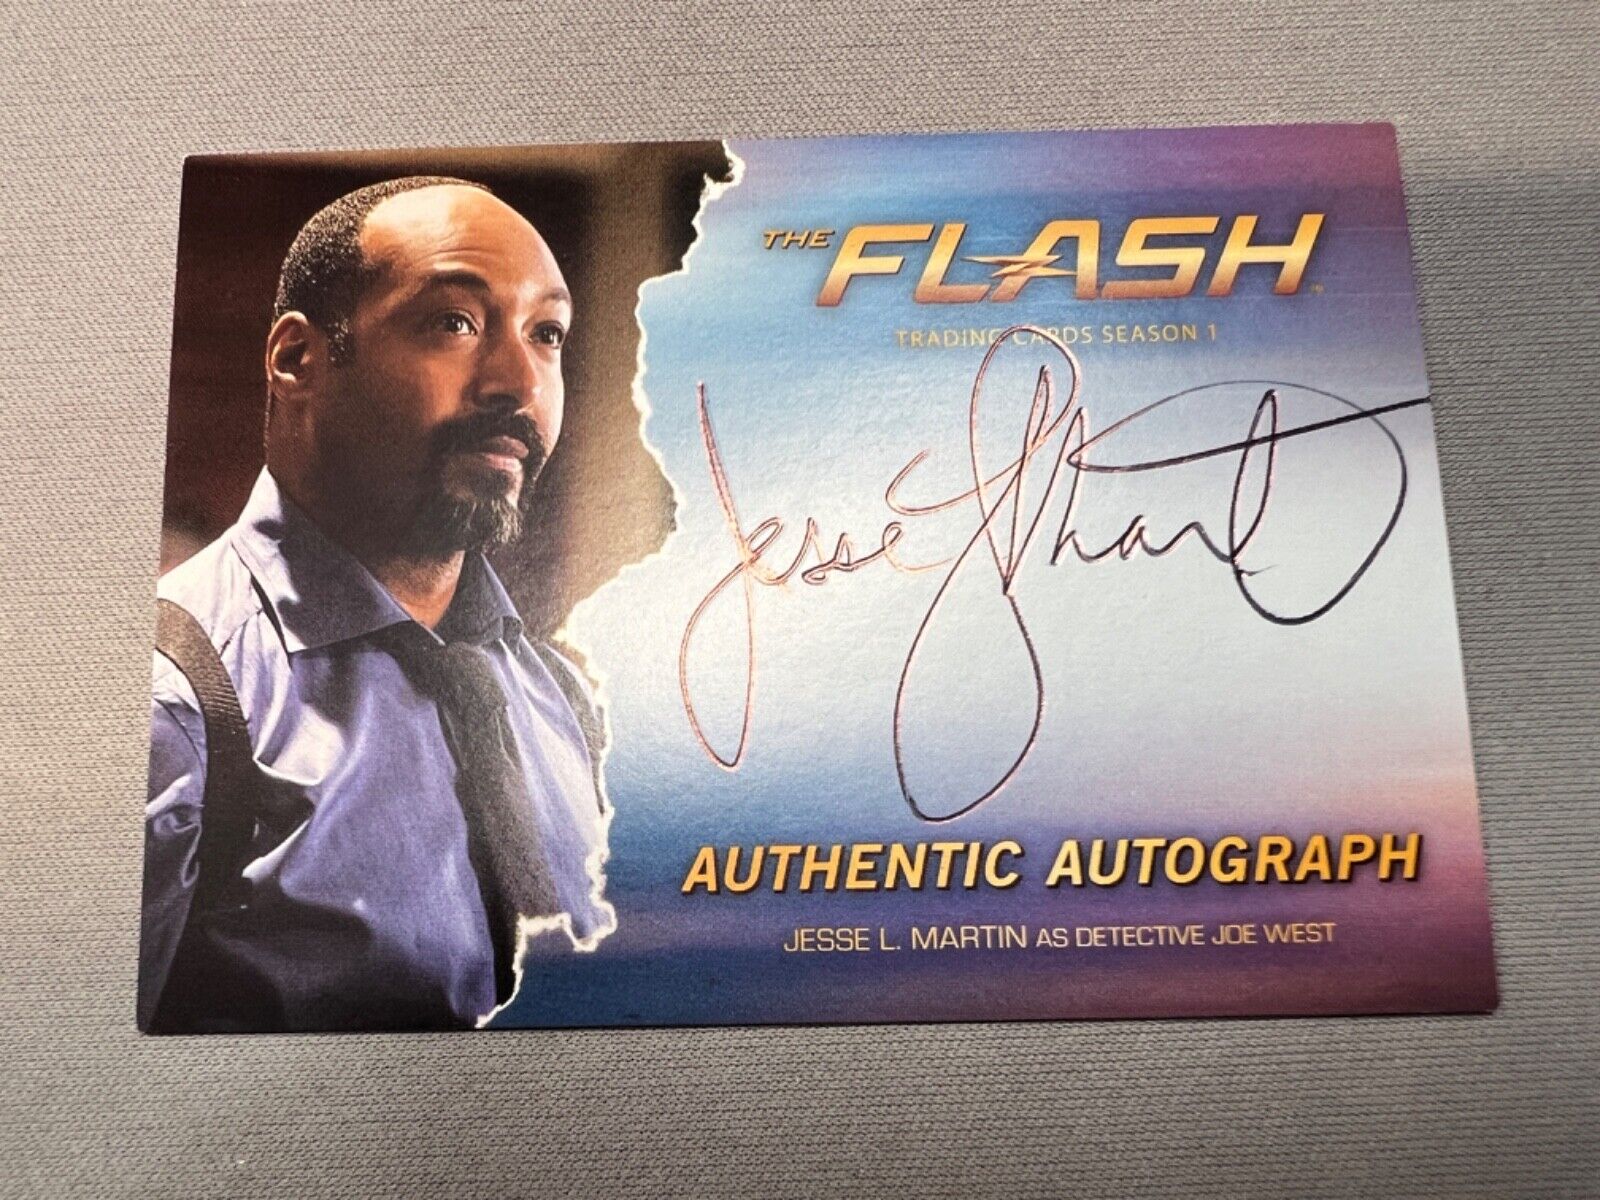 JESSE L MARTIN - Joe West - Autograph Card - The Flash Season 1 Cryptozoic JLM